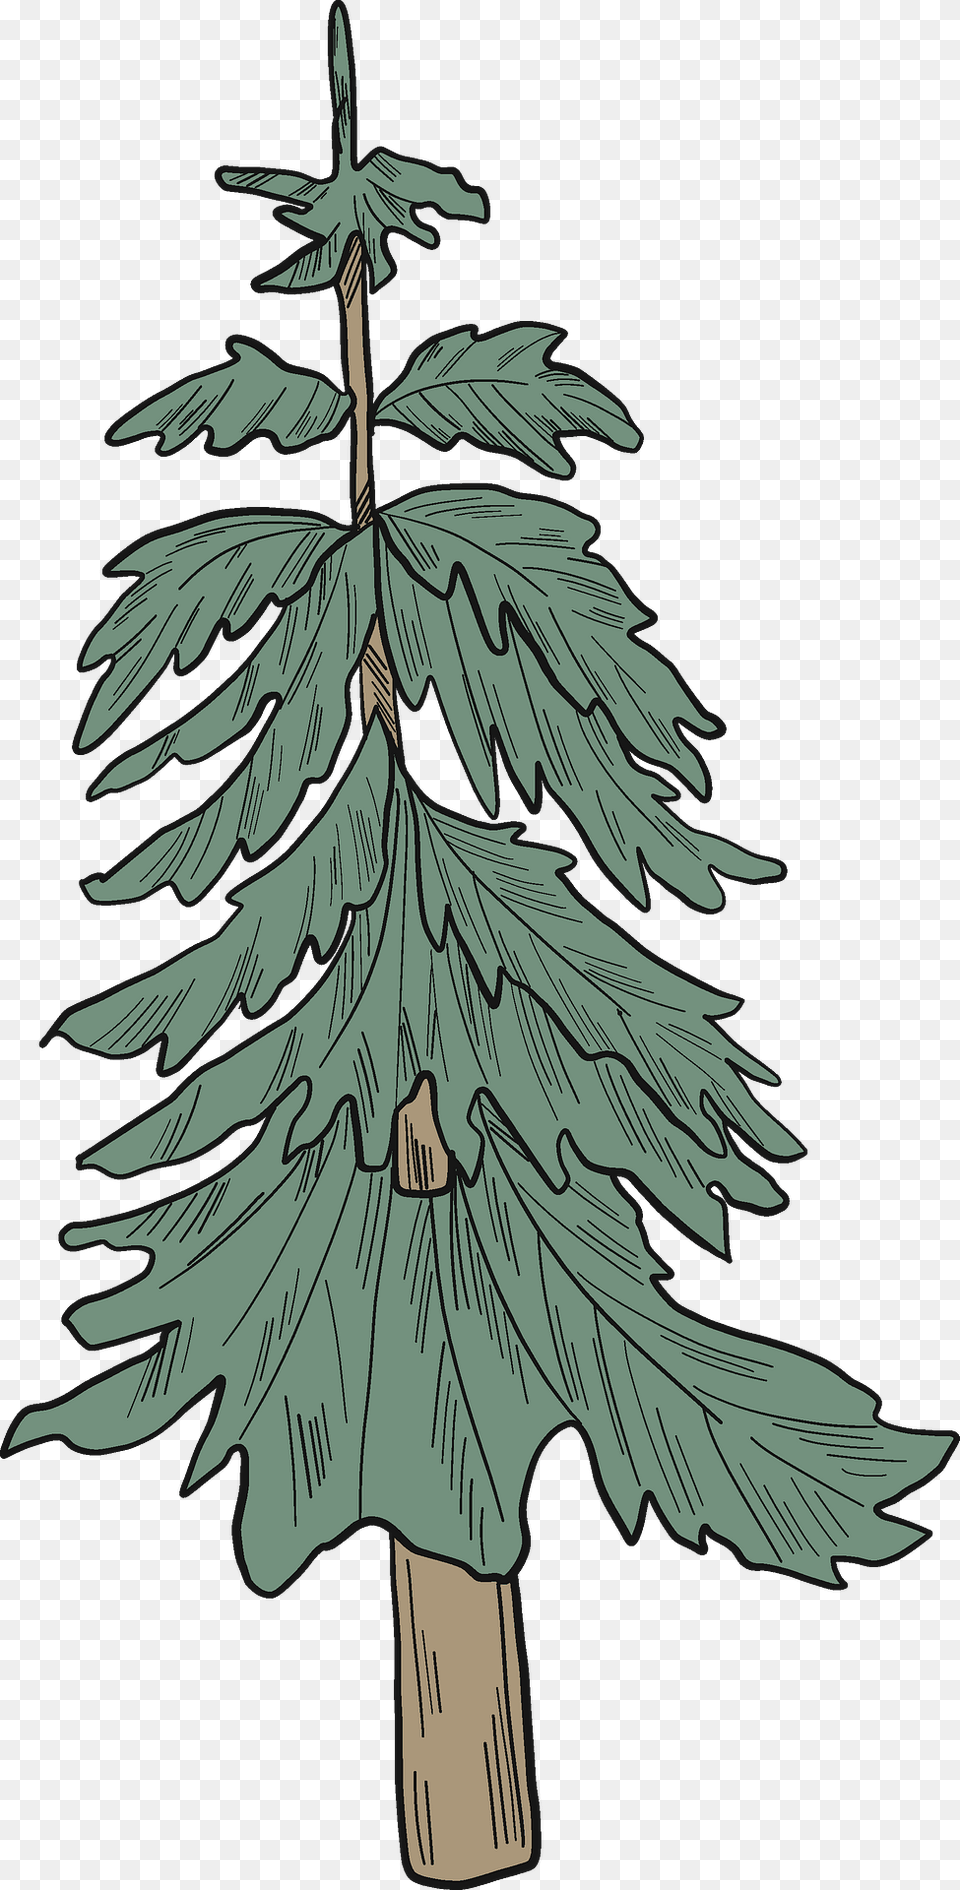 Evergreen Tree Clipart, Plant, Pine, Fir, Conifer Png